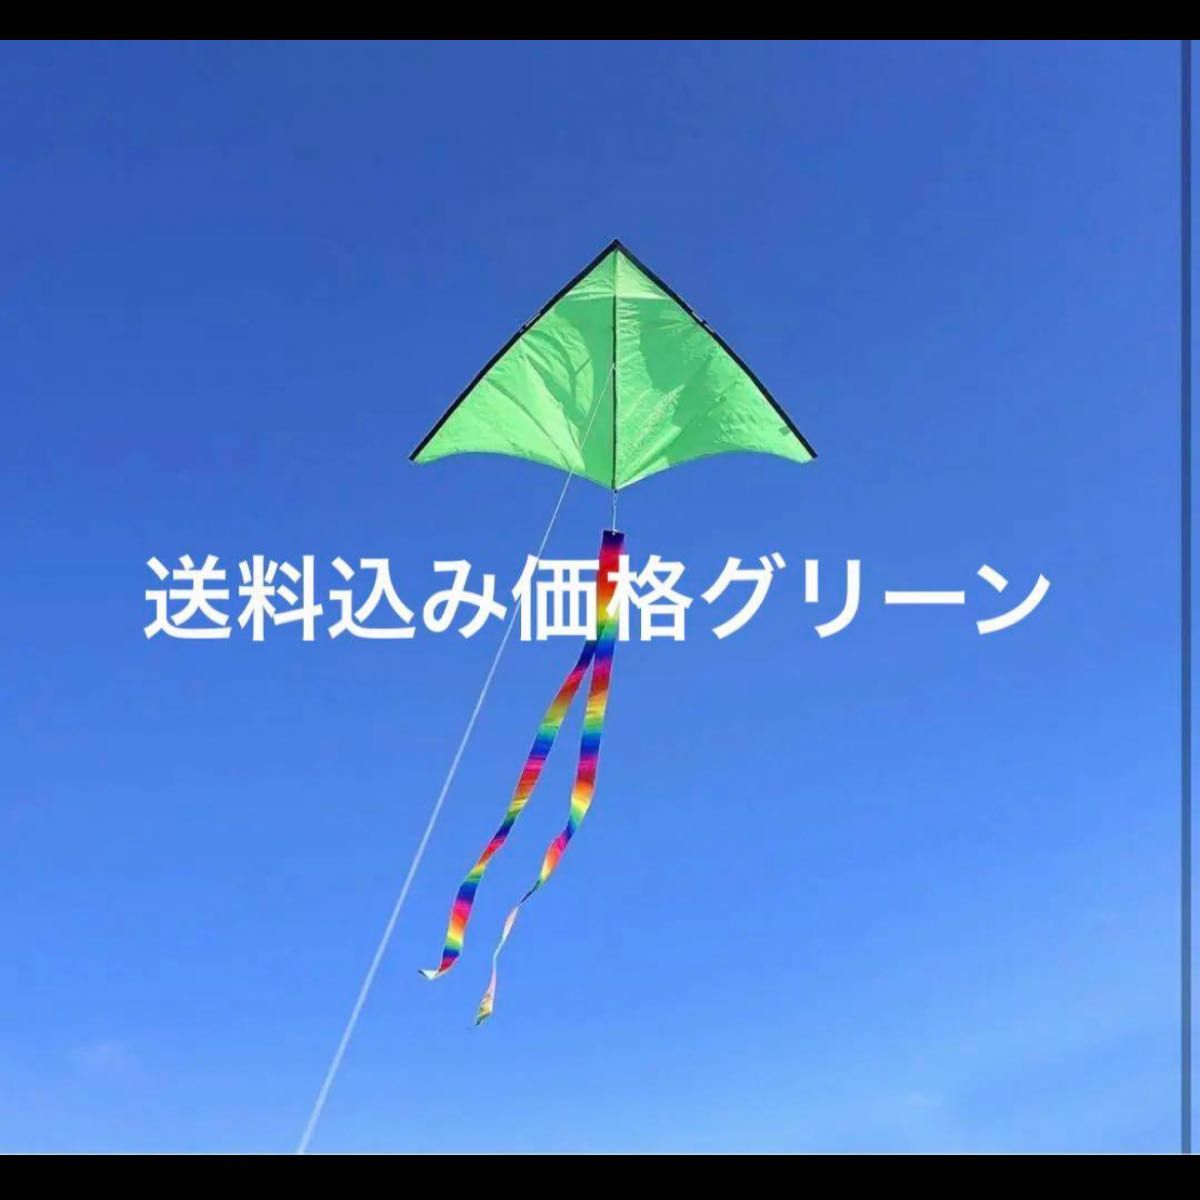 emma kites 1.5M100M凧糸とハンドル付き 超簡単に揚がる凧